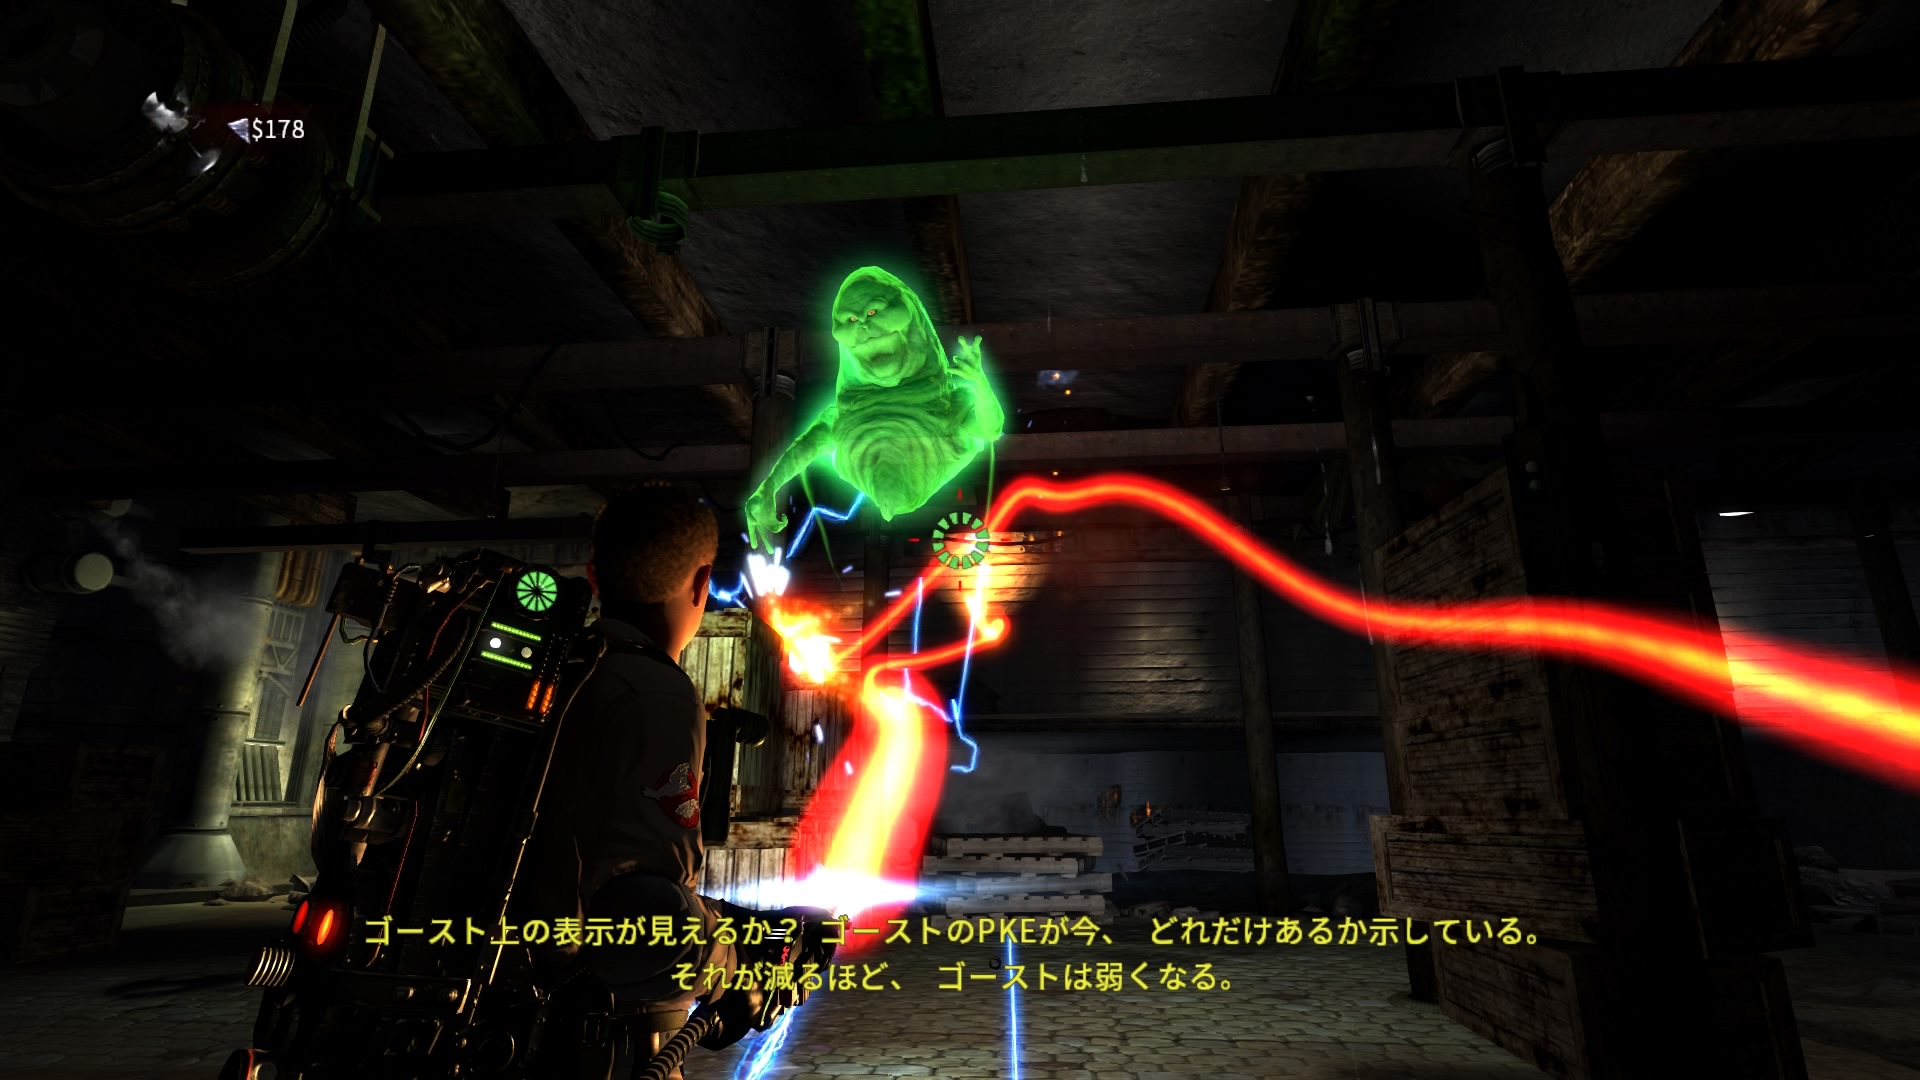 「Ghostbusters: The Video Game Remastered」プレイレポート。ゴーストバスターズの一員となり，あのビームを使いこなして幽霊退治に挑む